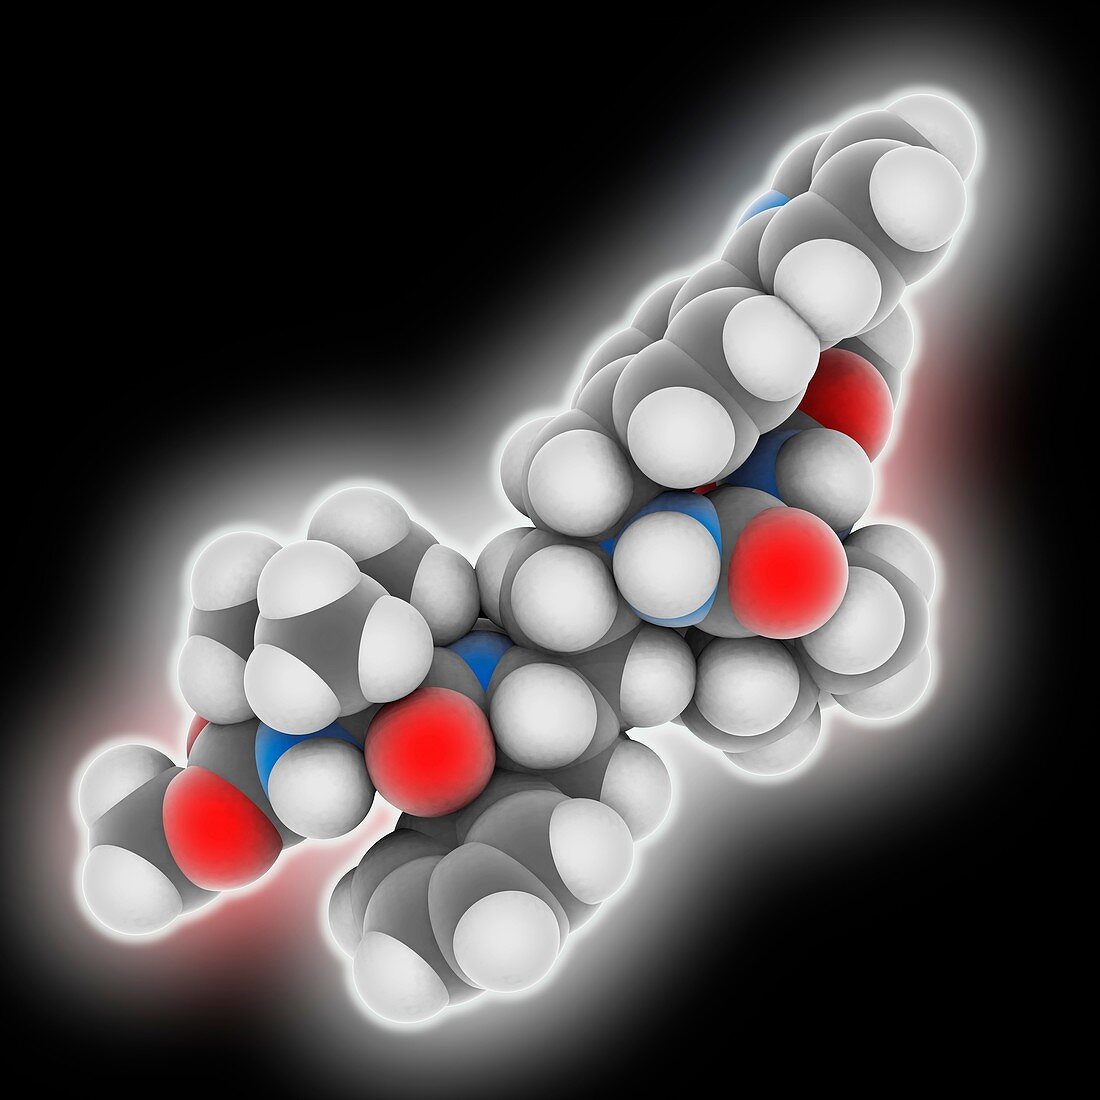 Atazanavir drug molecule